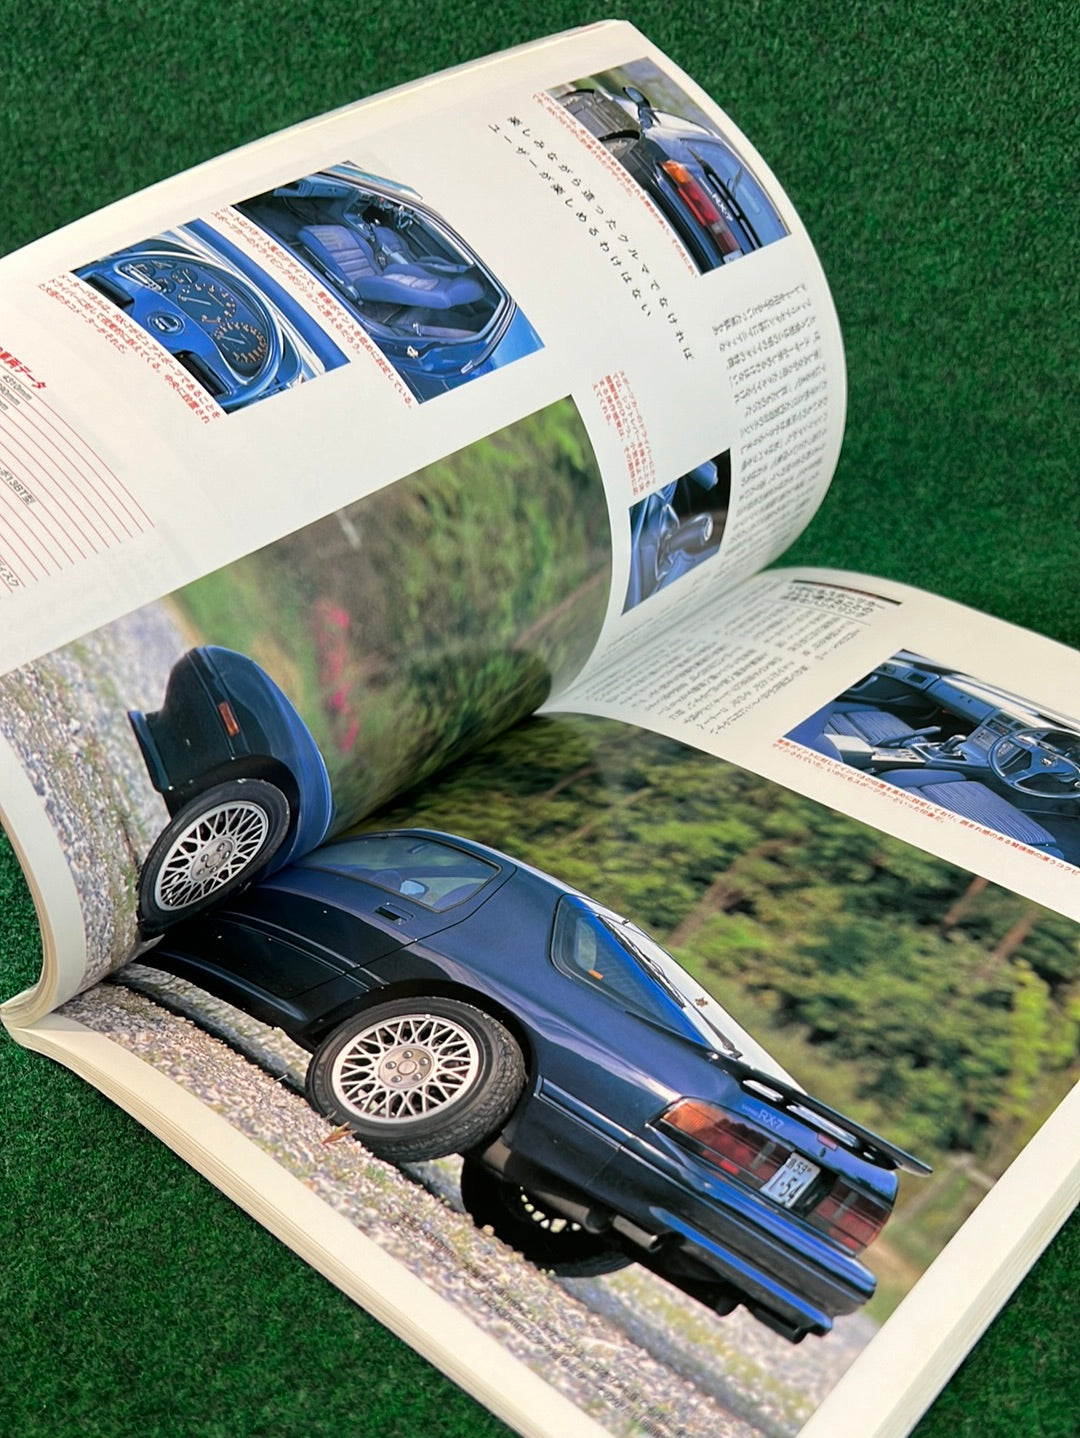 The History of Rotary - Mazda Magazine